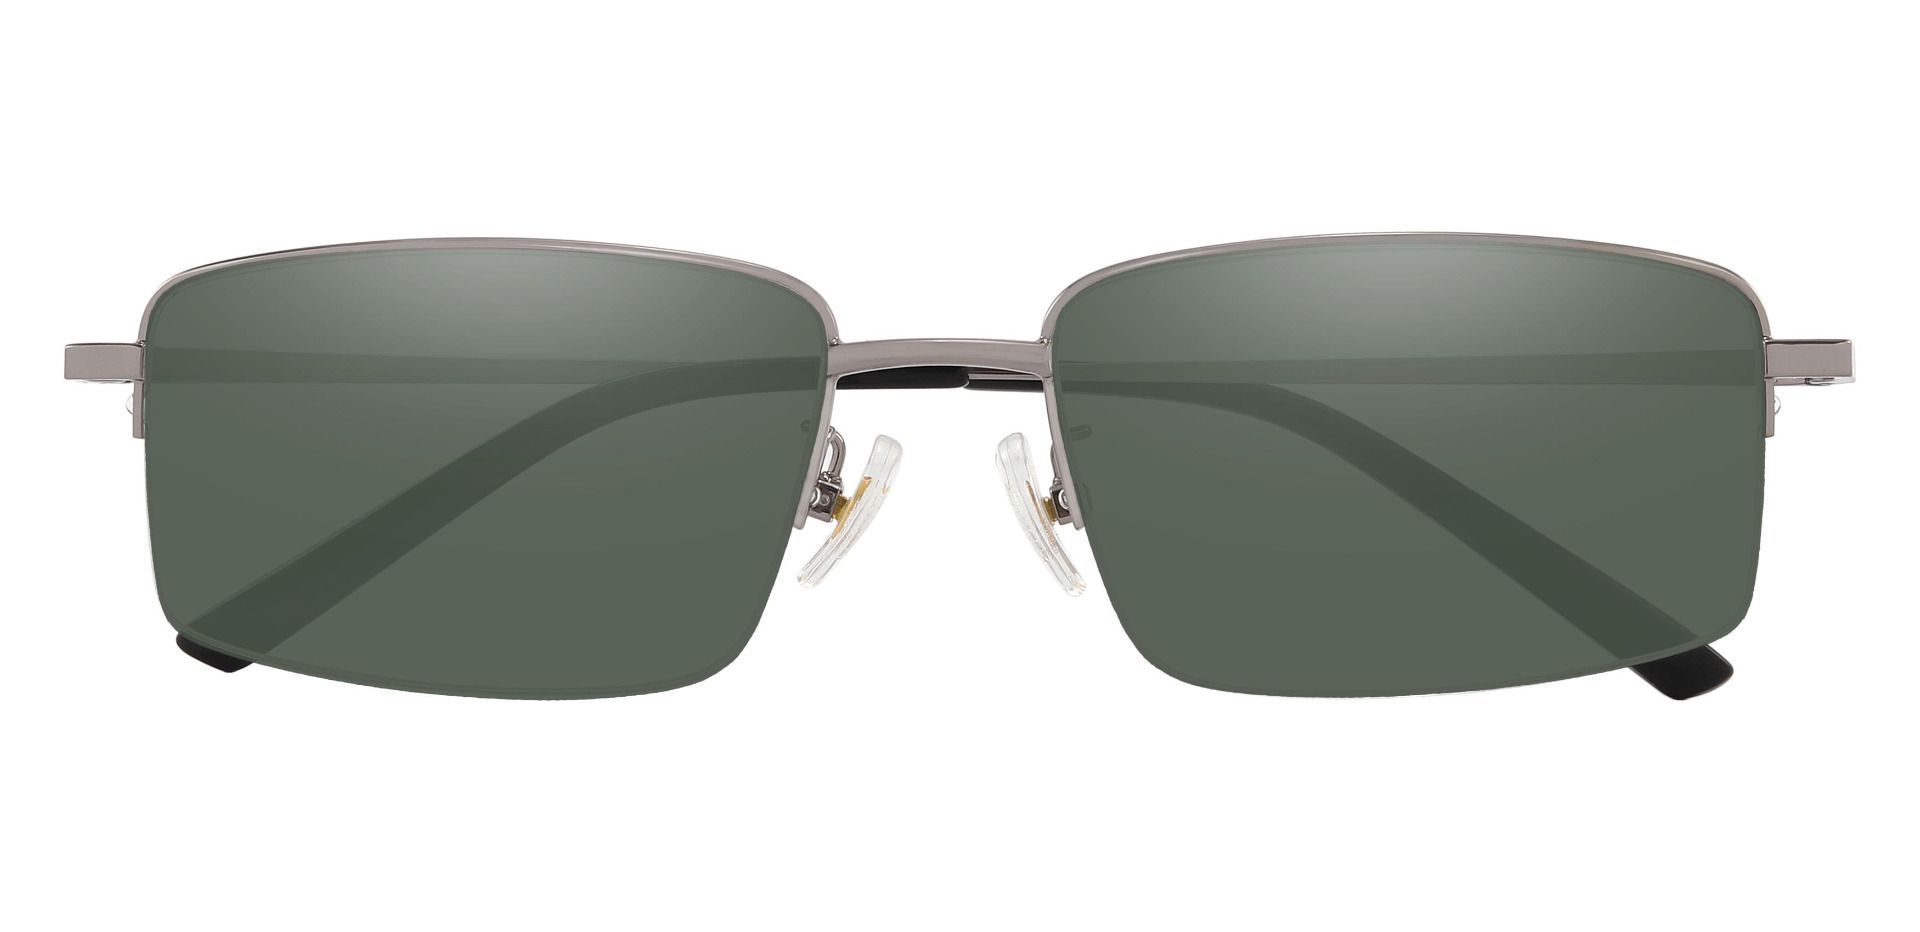 Wayne Rectangle Progressive Sunglasses - Gray Frame With Green Lenses